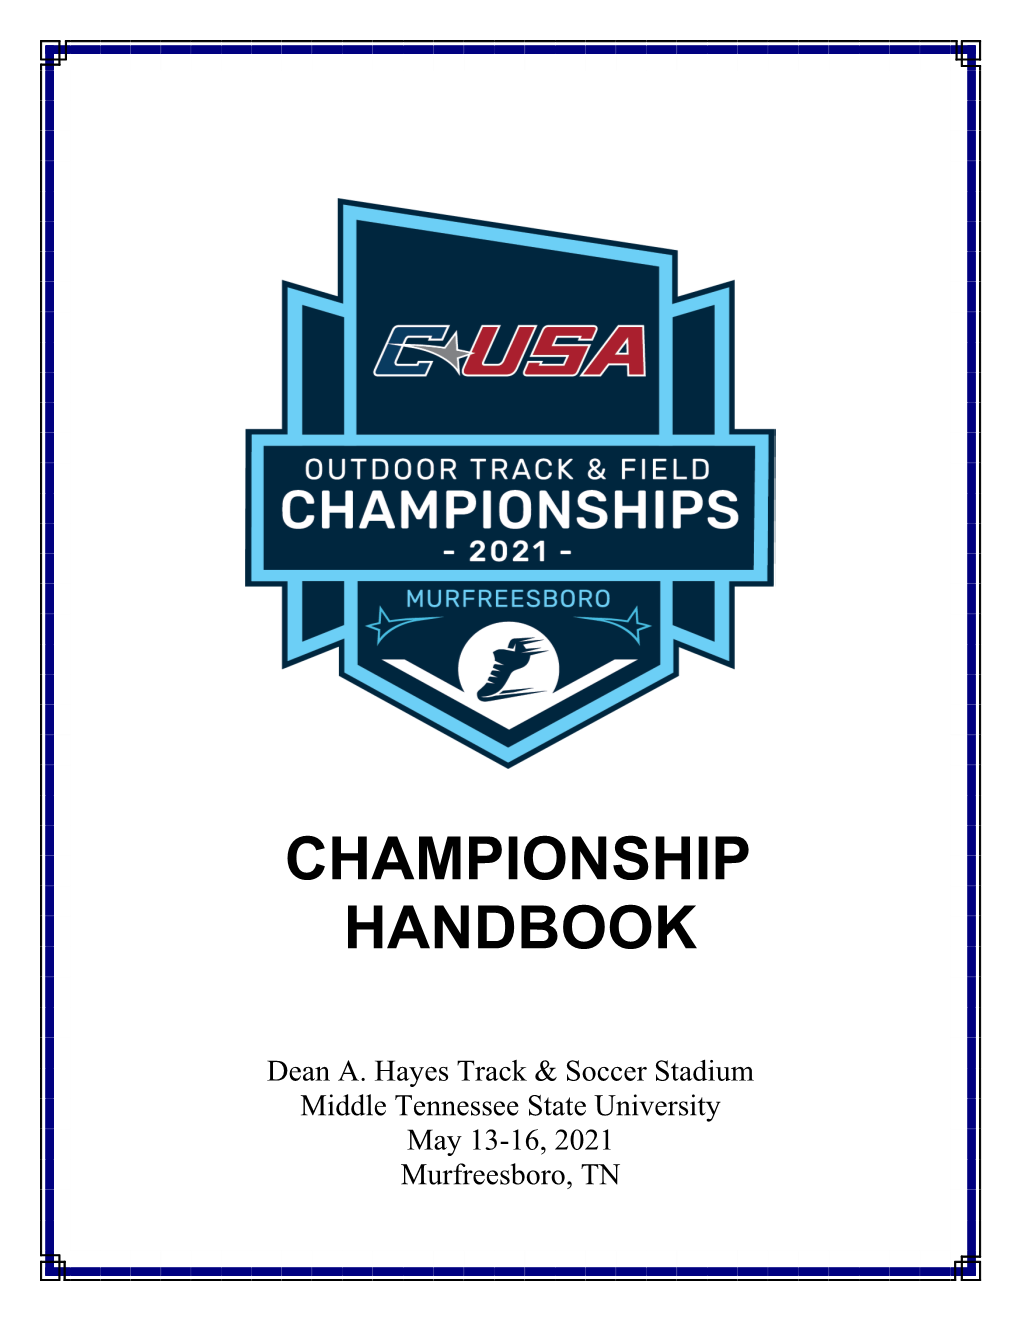 Championship Handbook